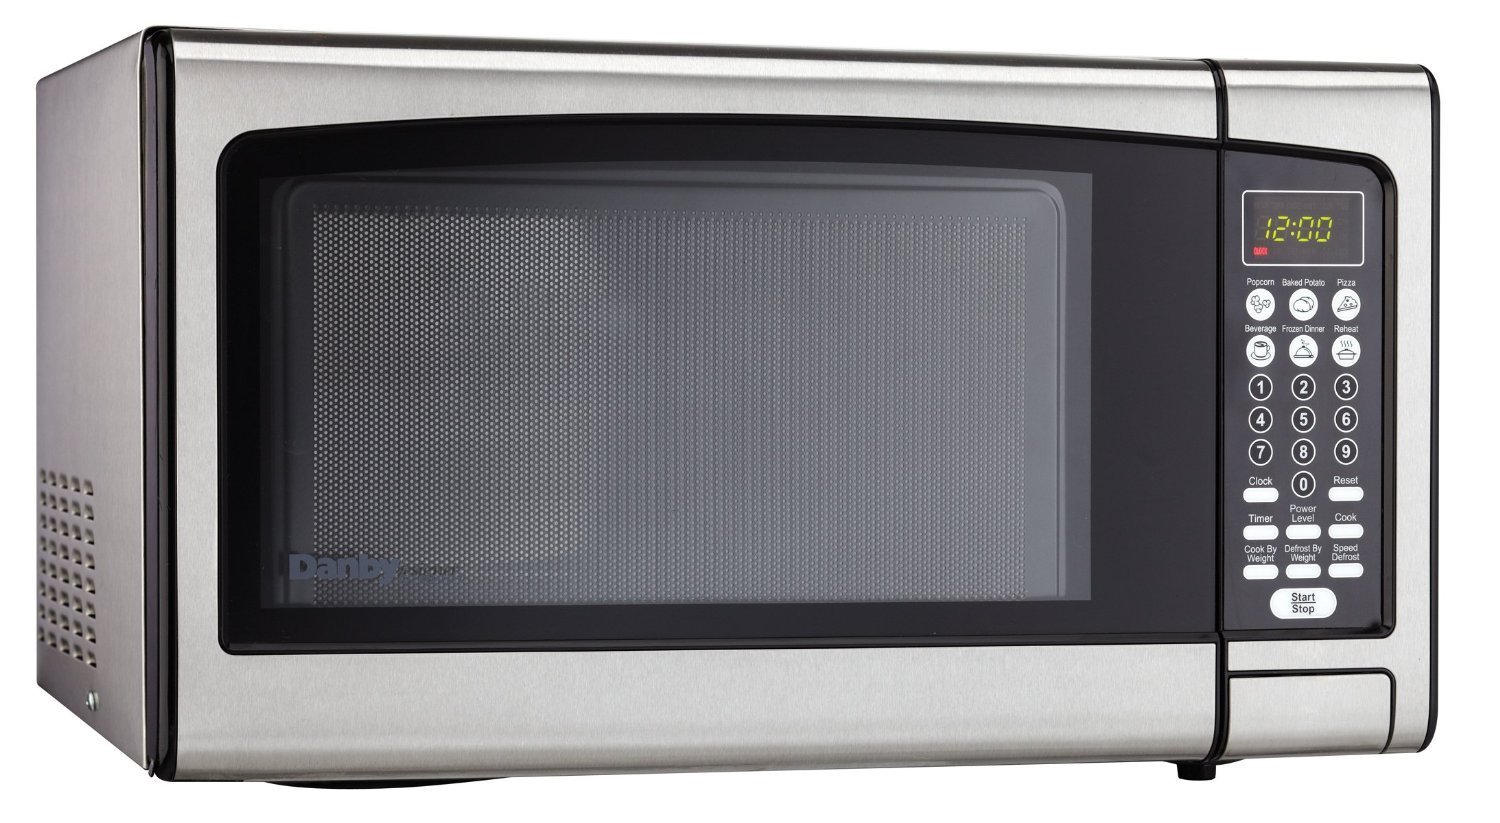 Danby Microwave Oven Premium Compact Portable Countertop Electric